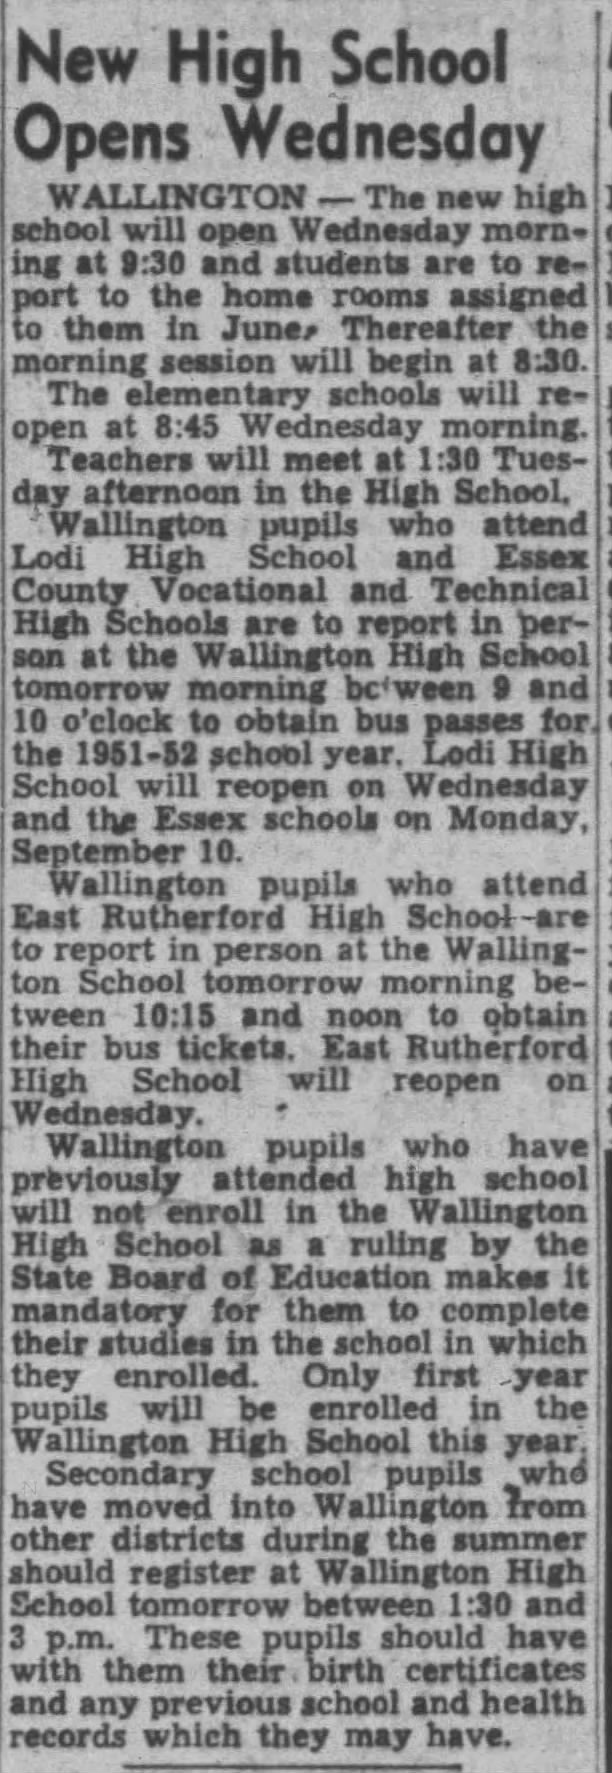 Opening of Wallington High School